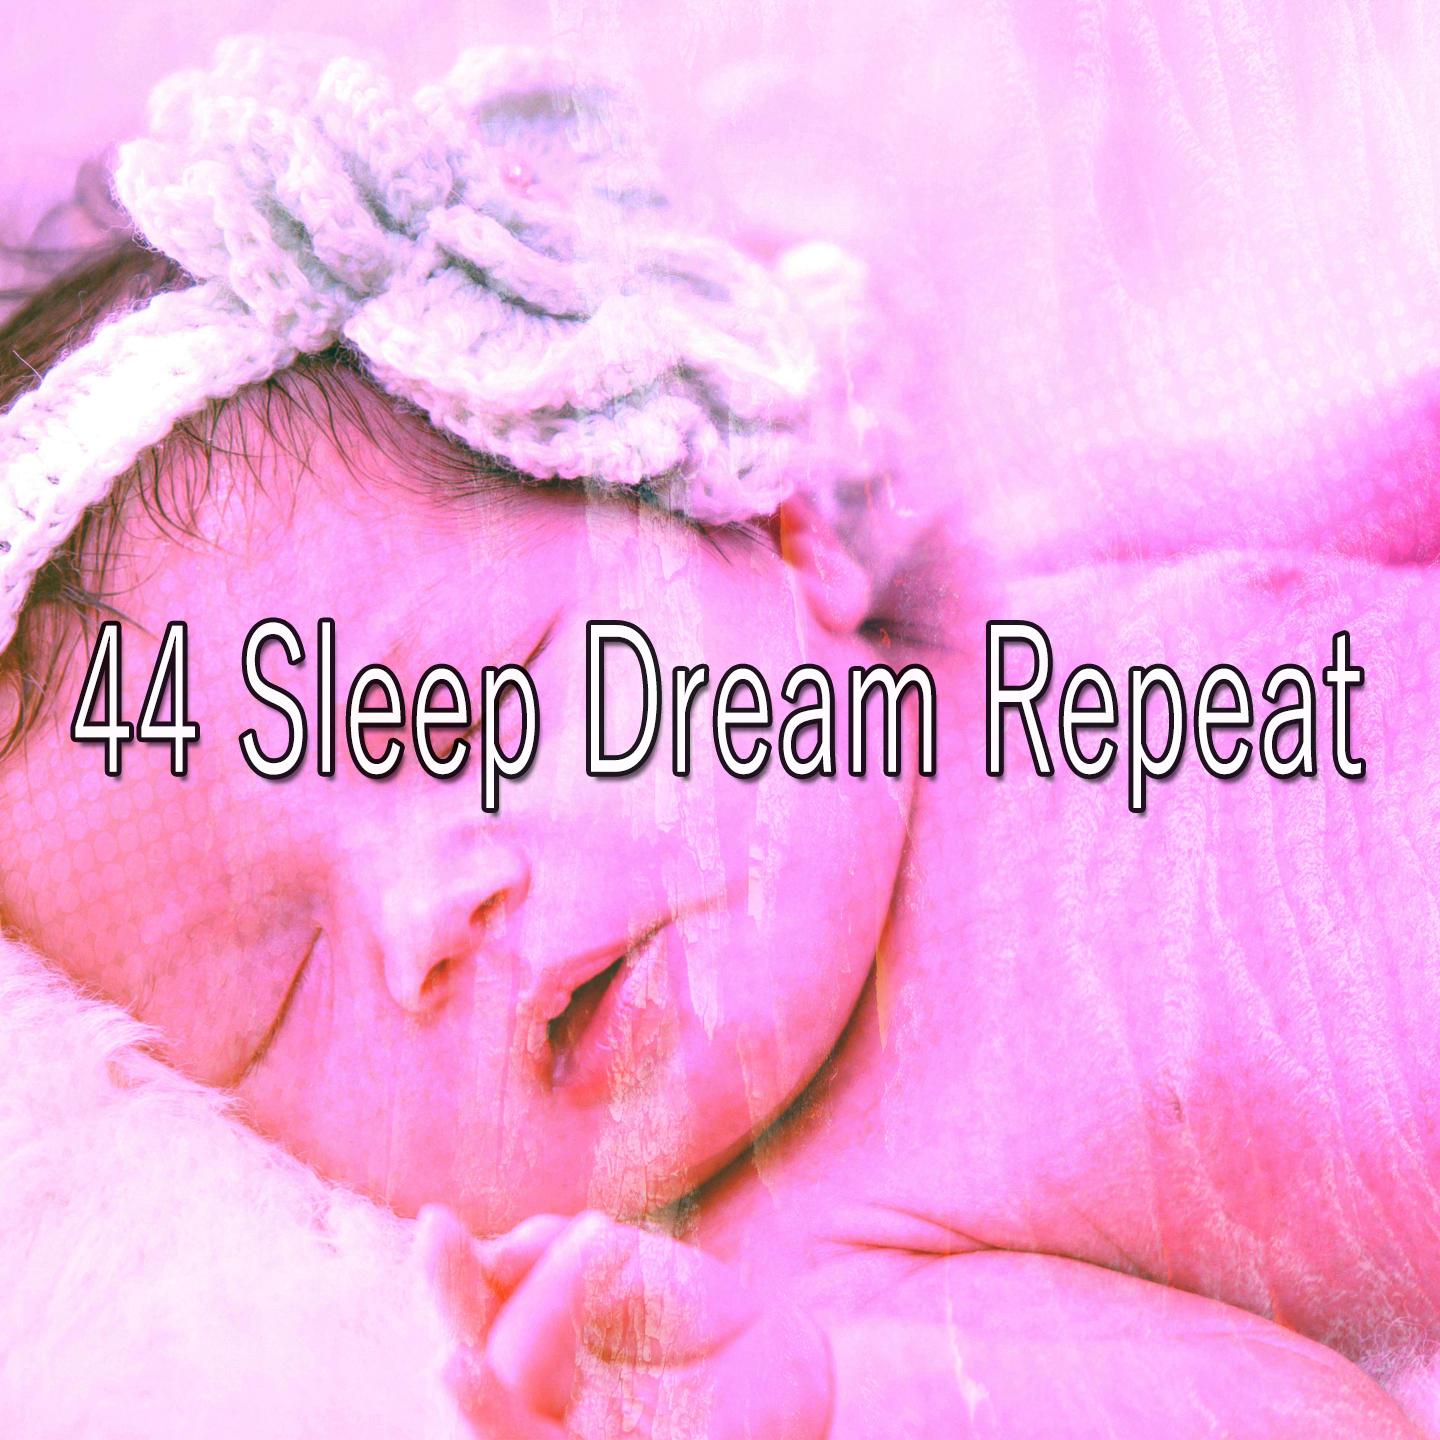 44 Sleep Dream Repeat